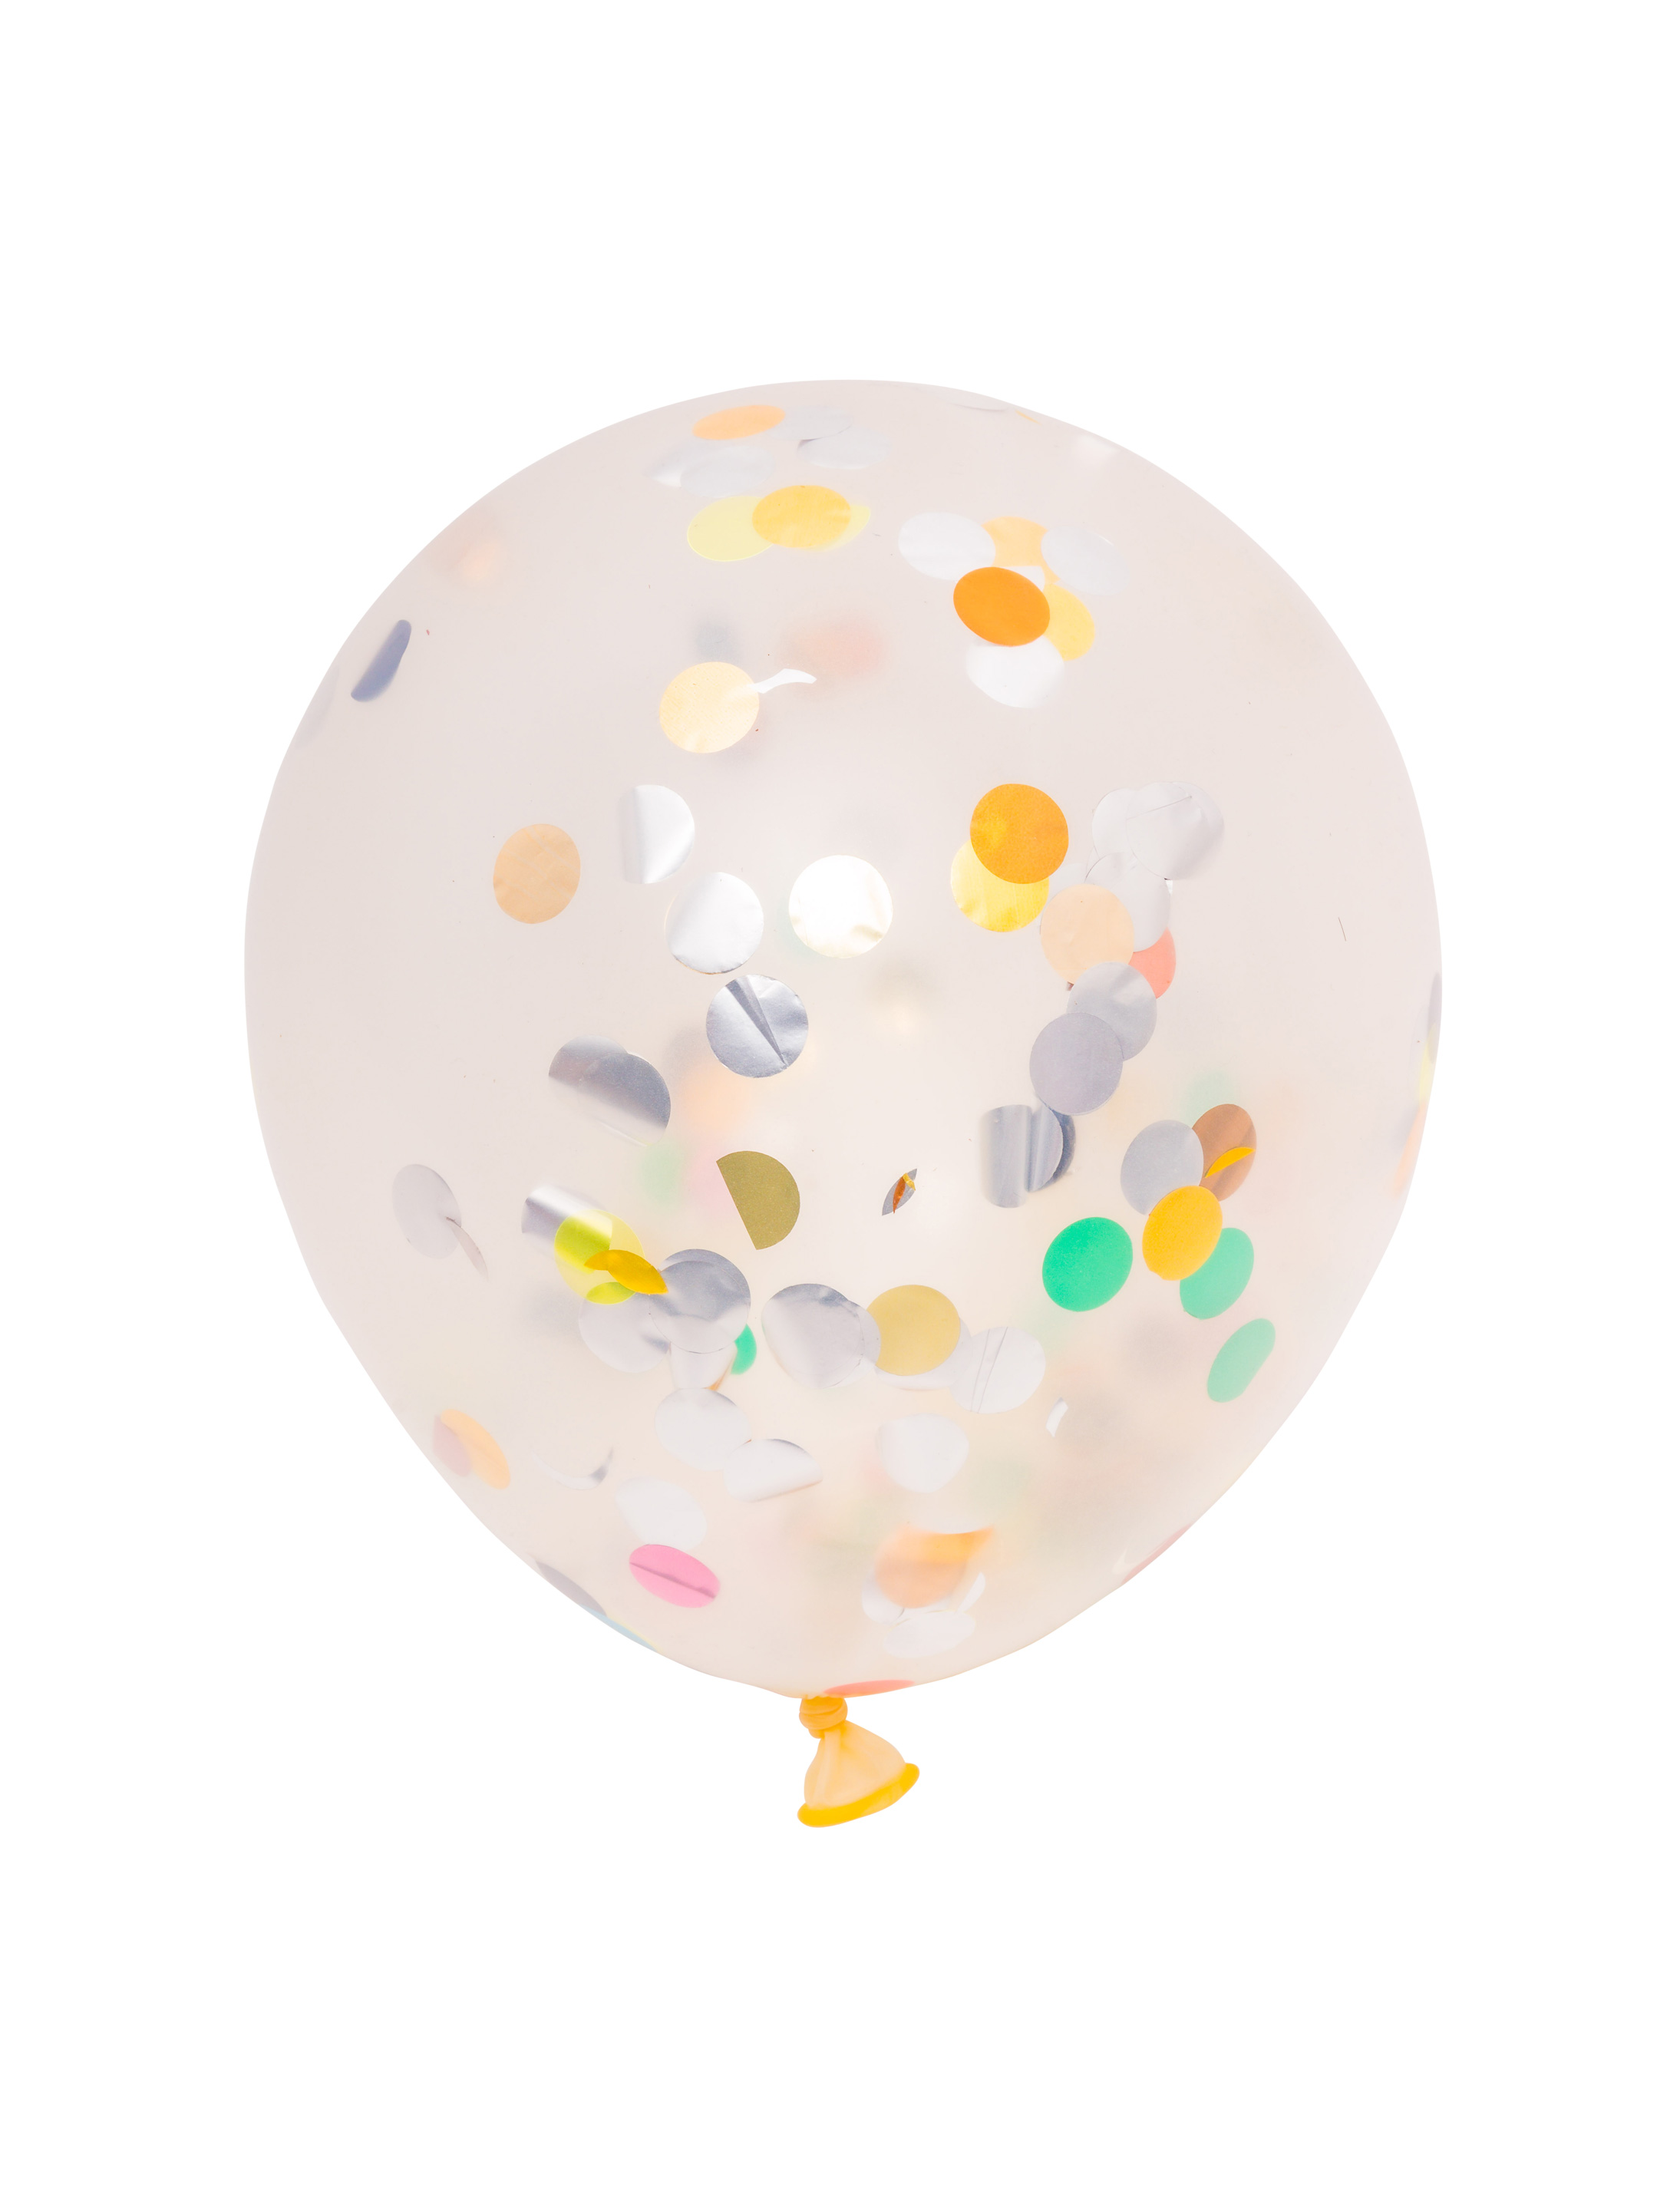 Ballon gefüllt mit buntem Konfetti